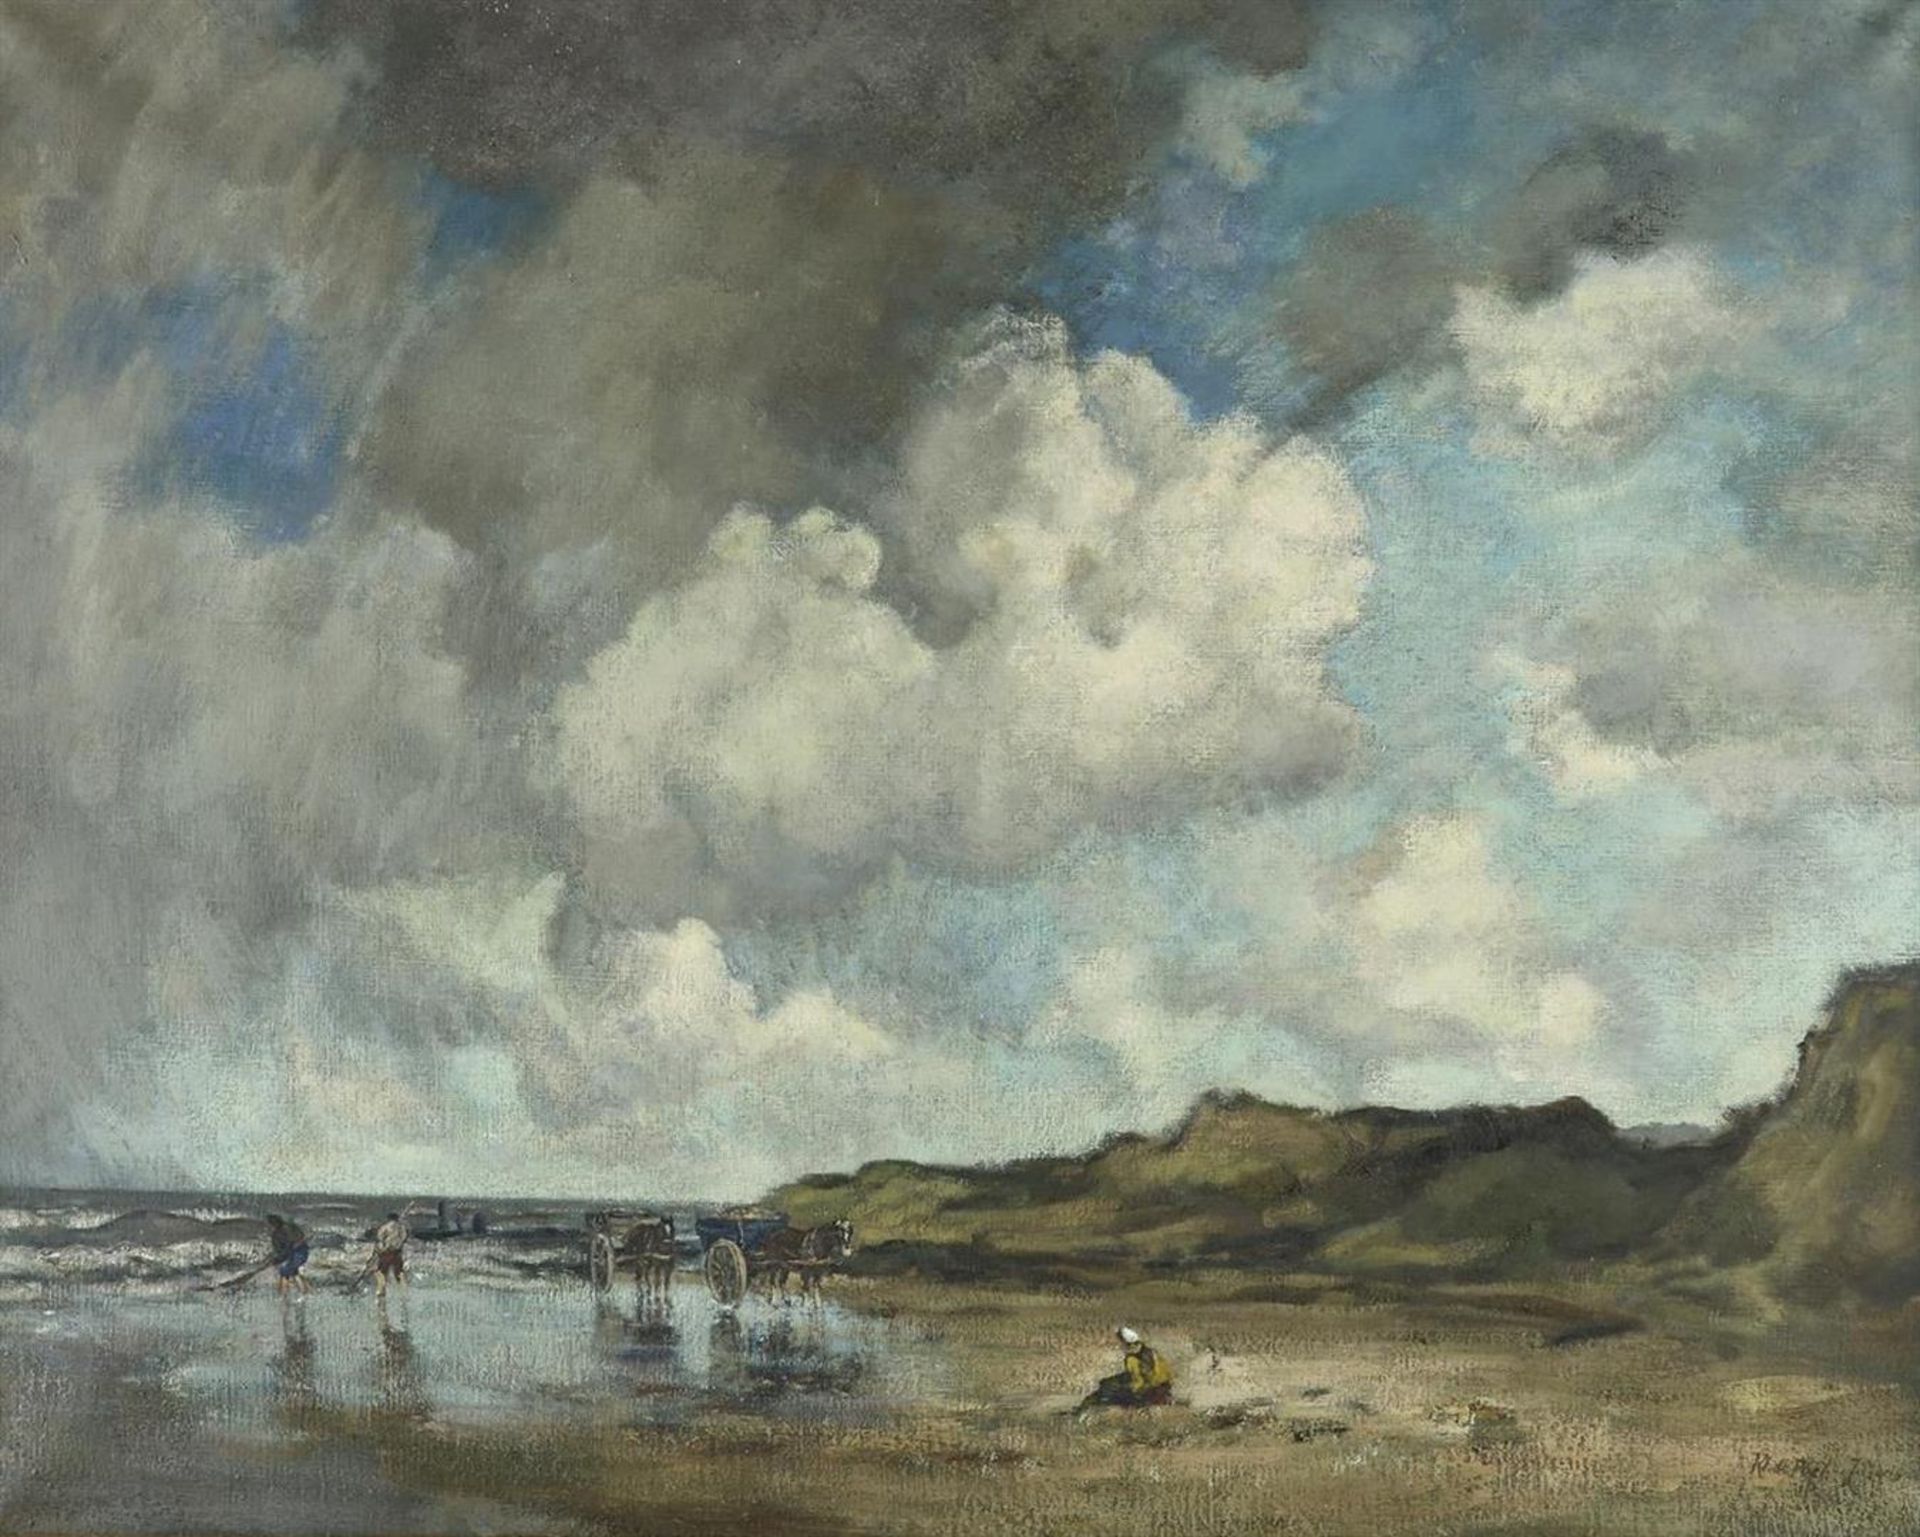 Klaas Poel de Beach view, signed bottom right, canvas, 100 x 130 cm.